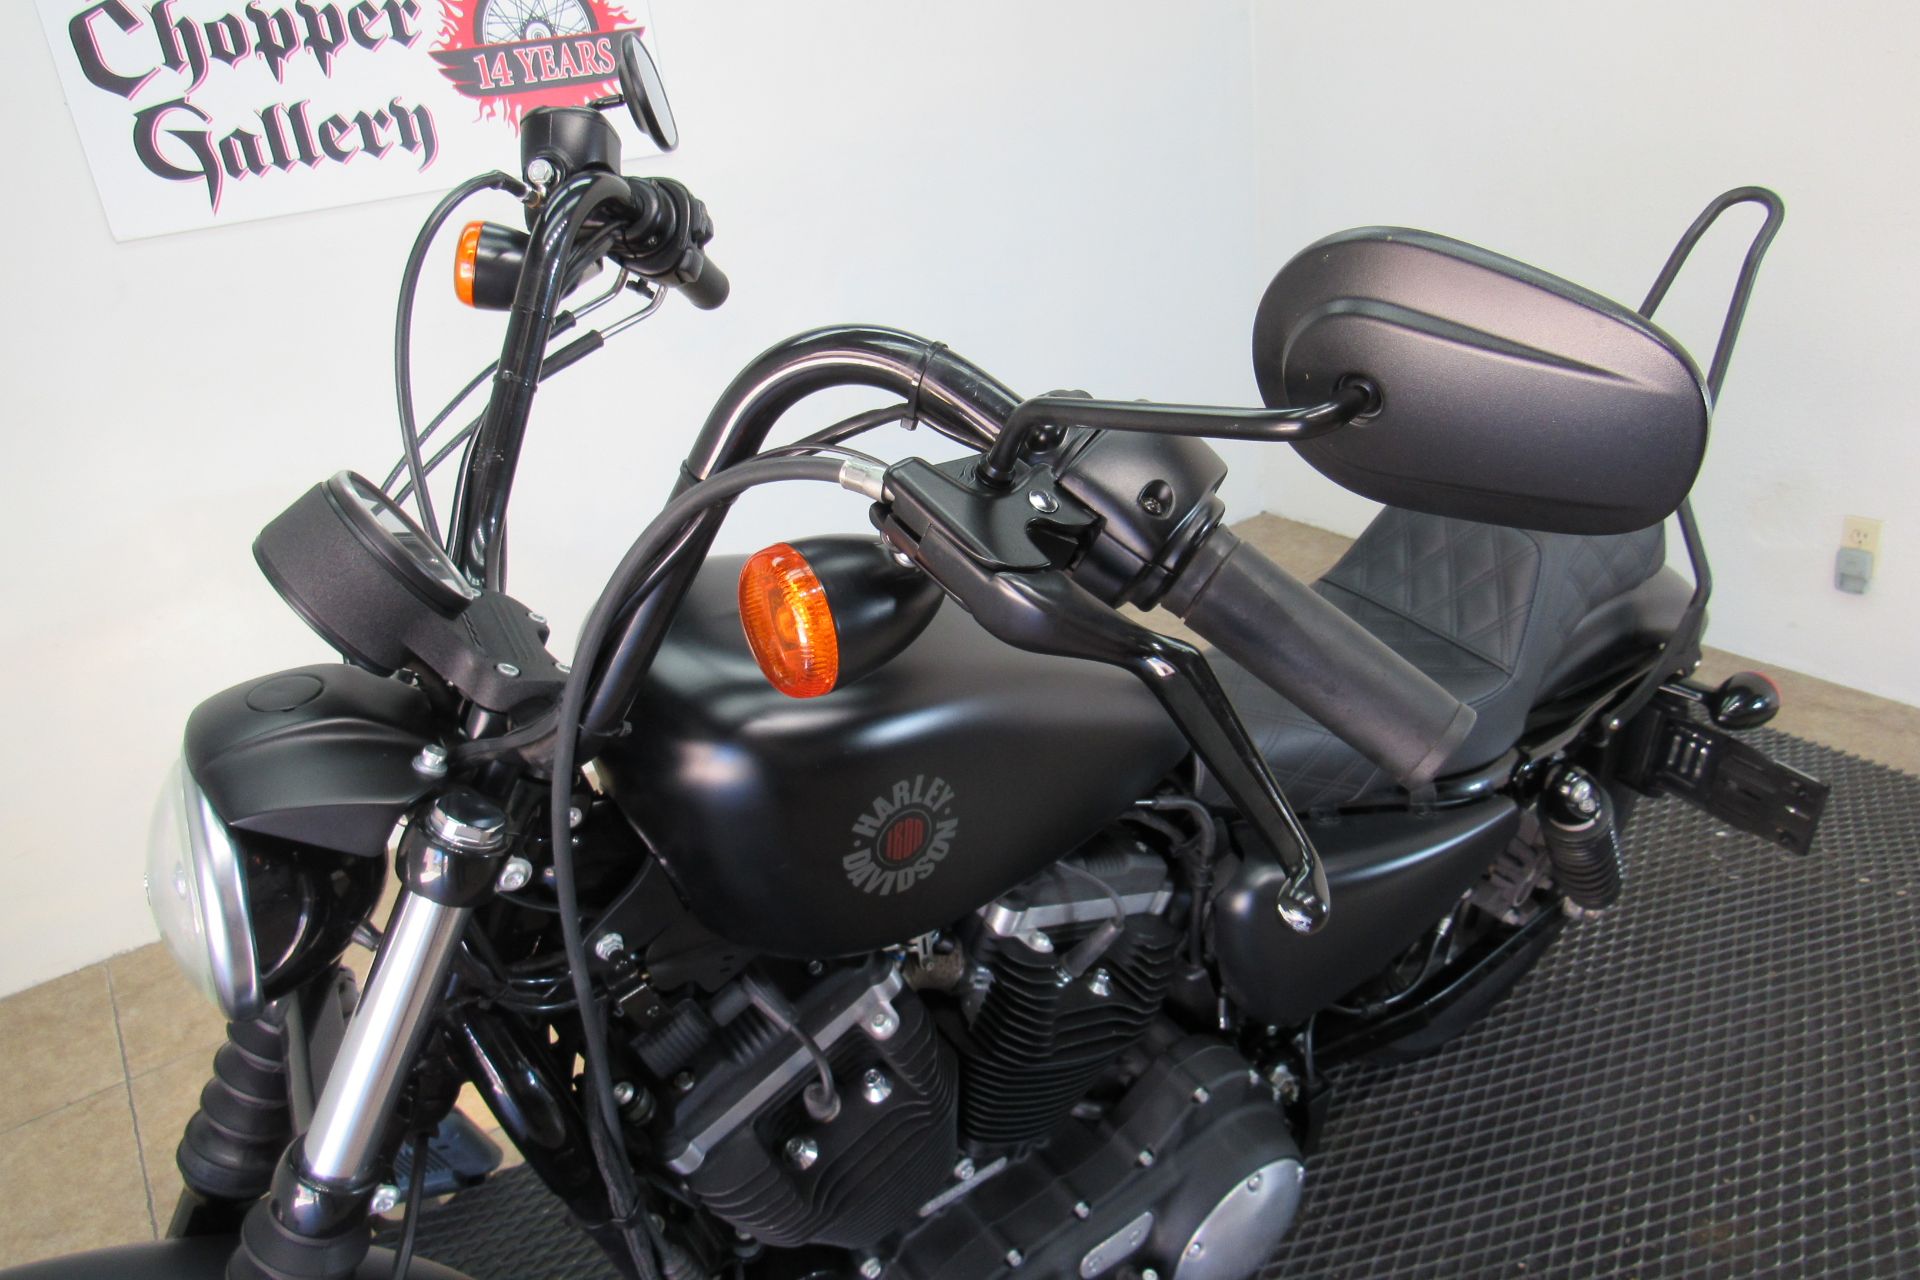 2019 Harley-Davidson Iron 883™ in Temecula, California - Photo 23